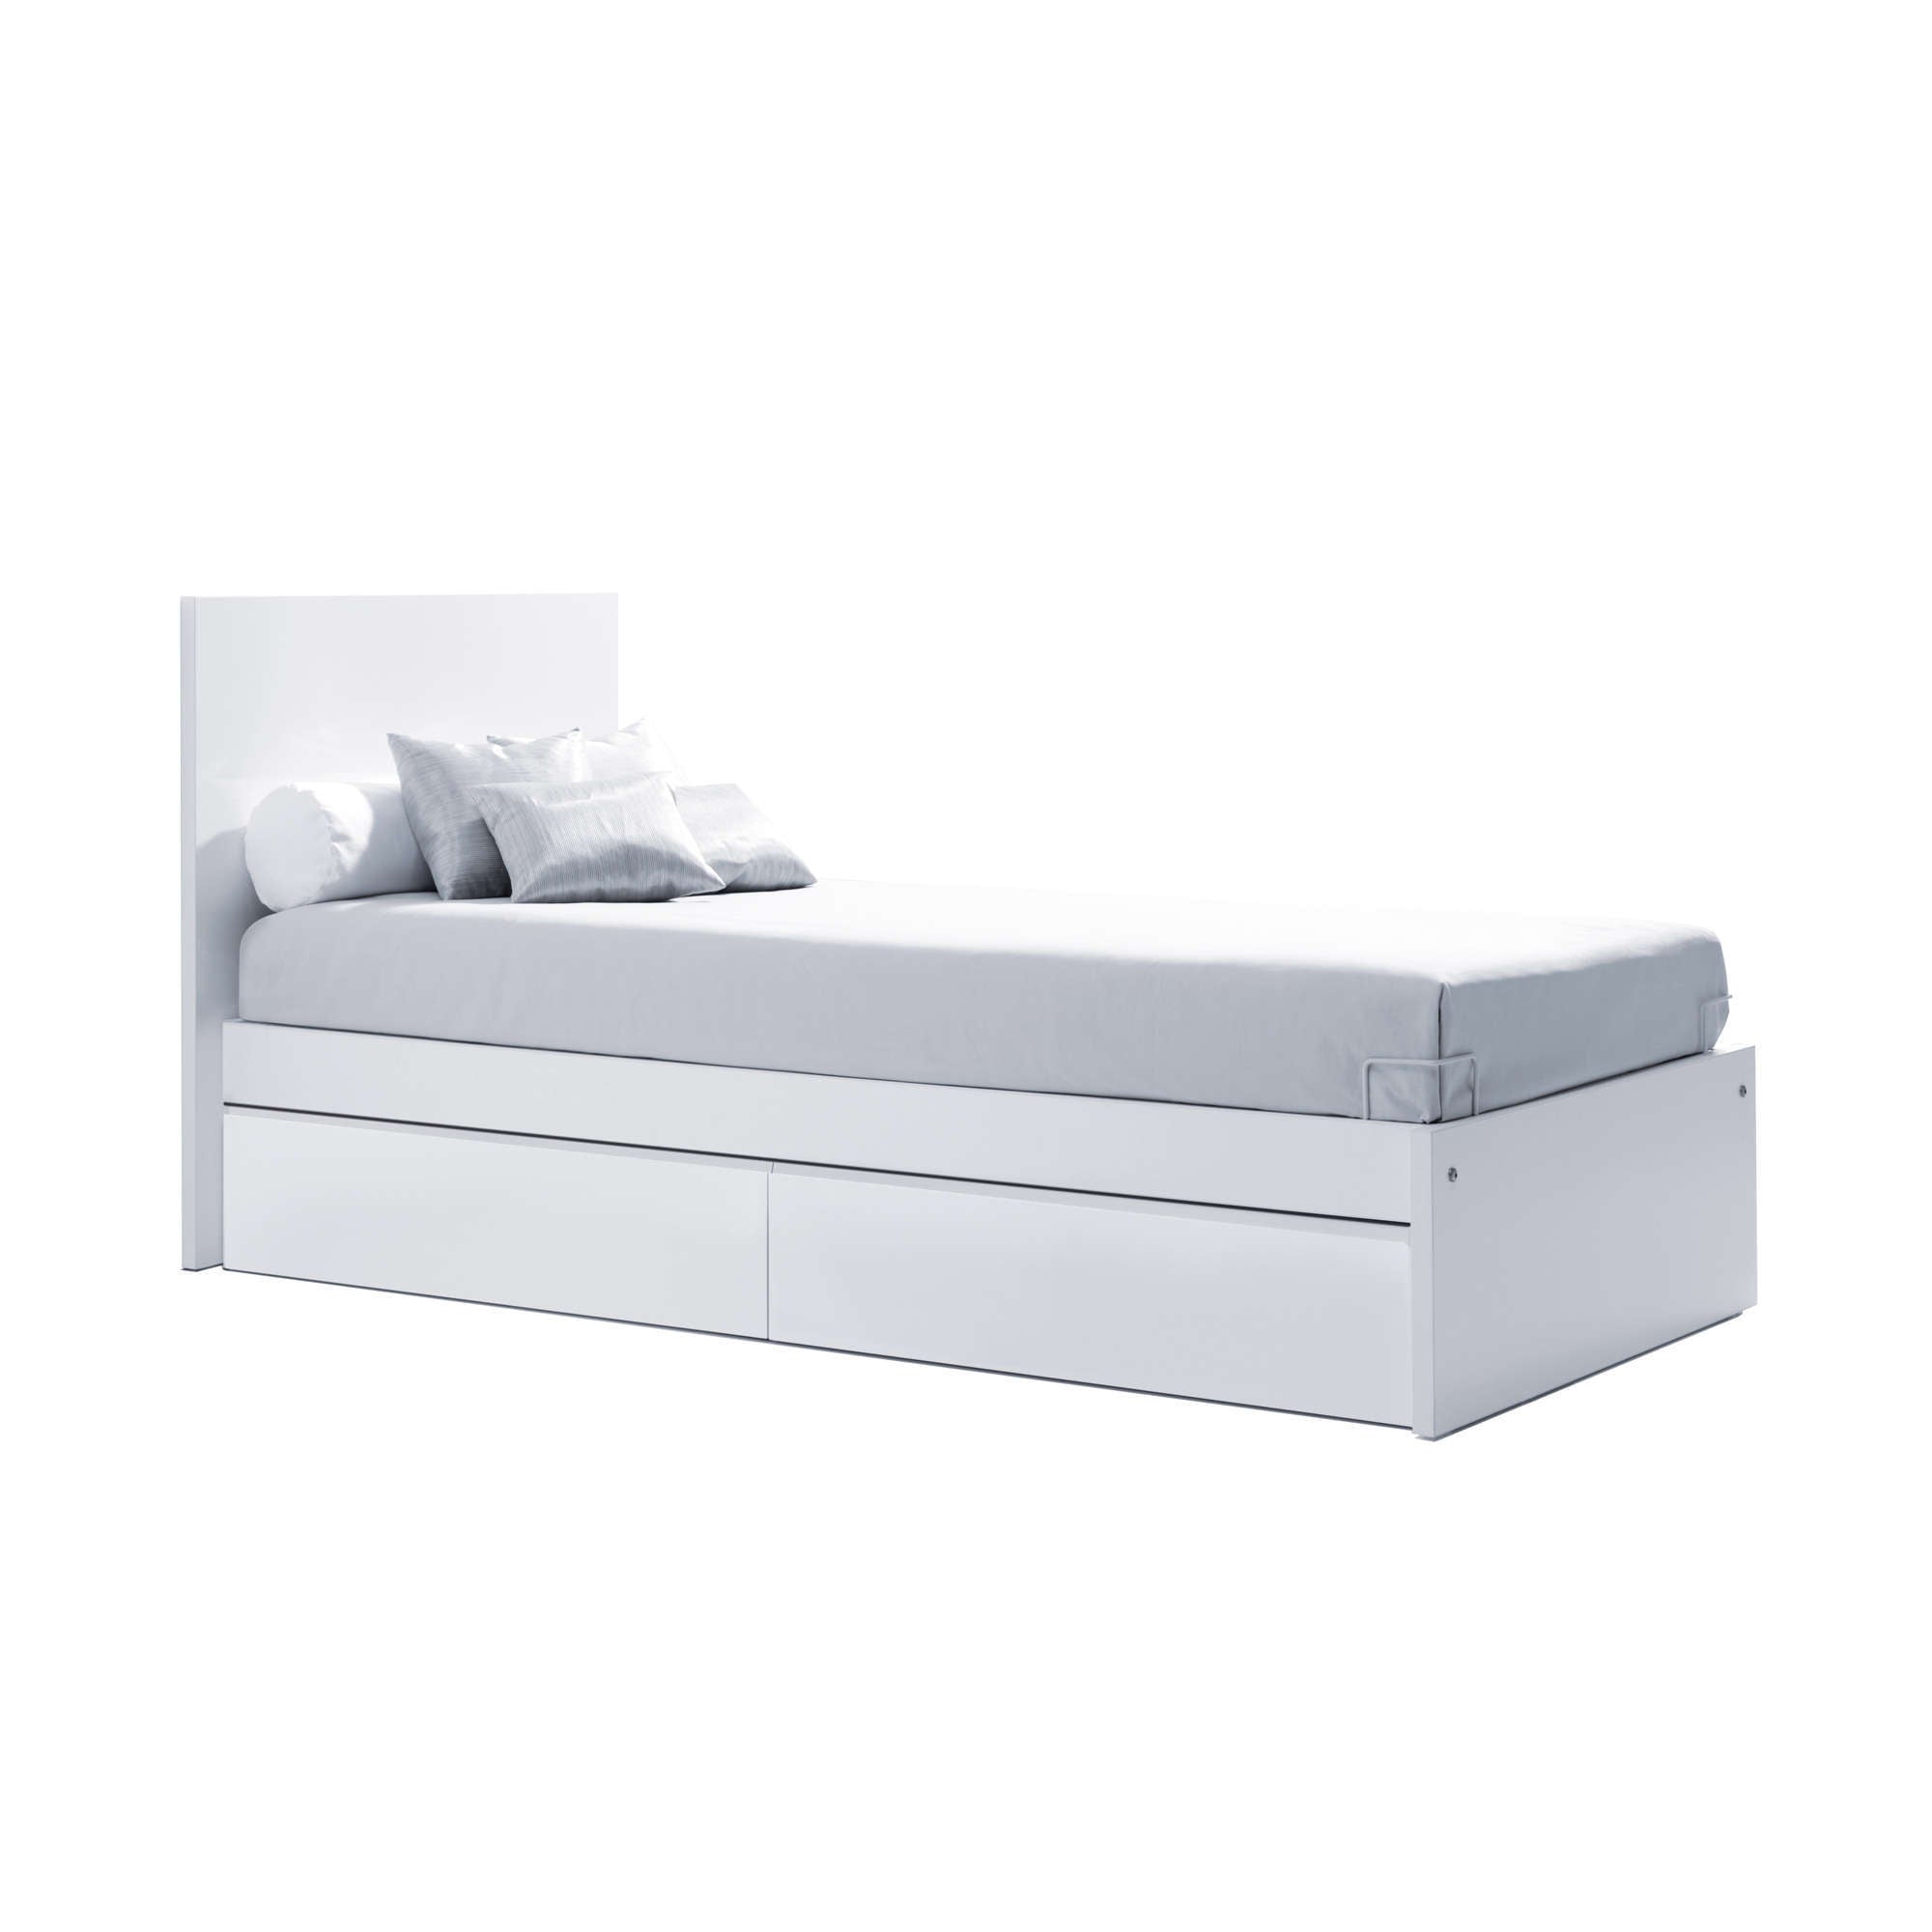 Kit colecho Alondra para cuna cama Montessori Auna (70 x 140 cm.) blanco ·  Alondra · El Corte Inglés